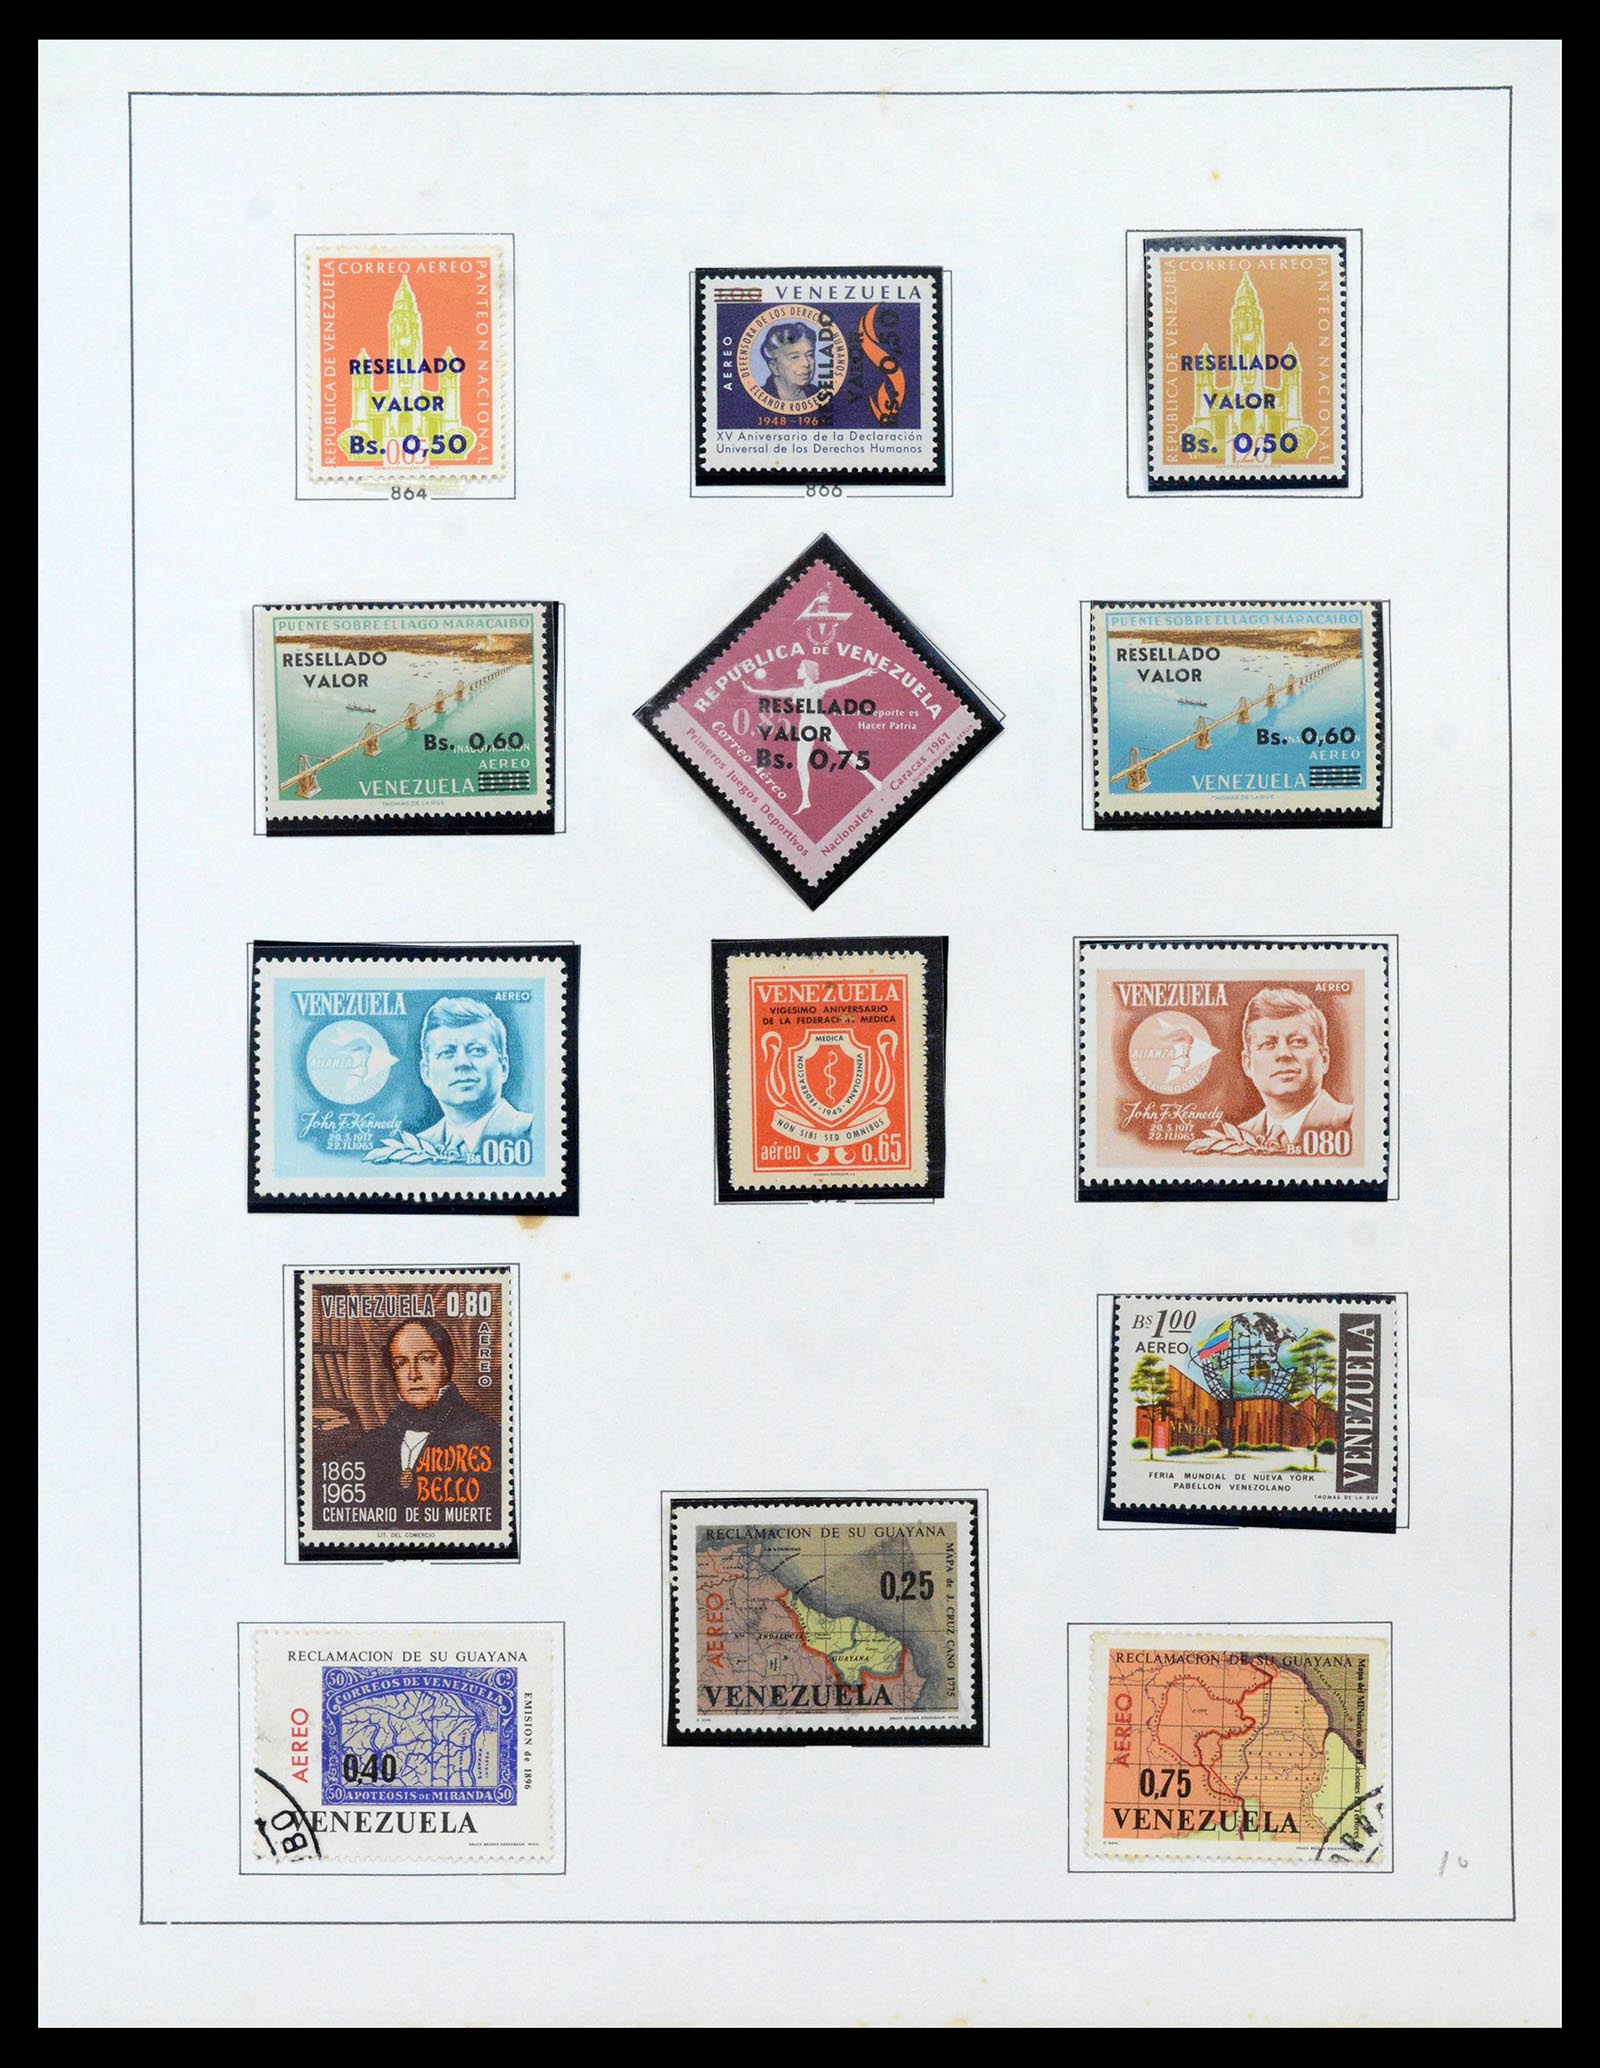 39436 0058 - Stamp collection 39436 Venezuela 1859-1985.